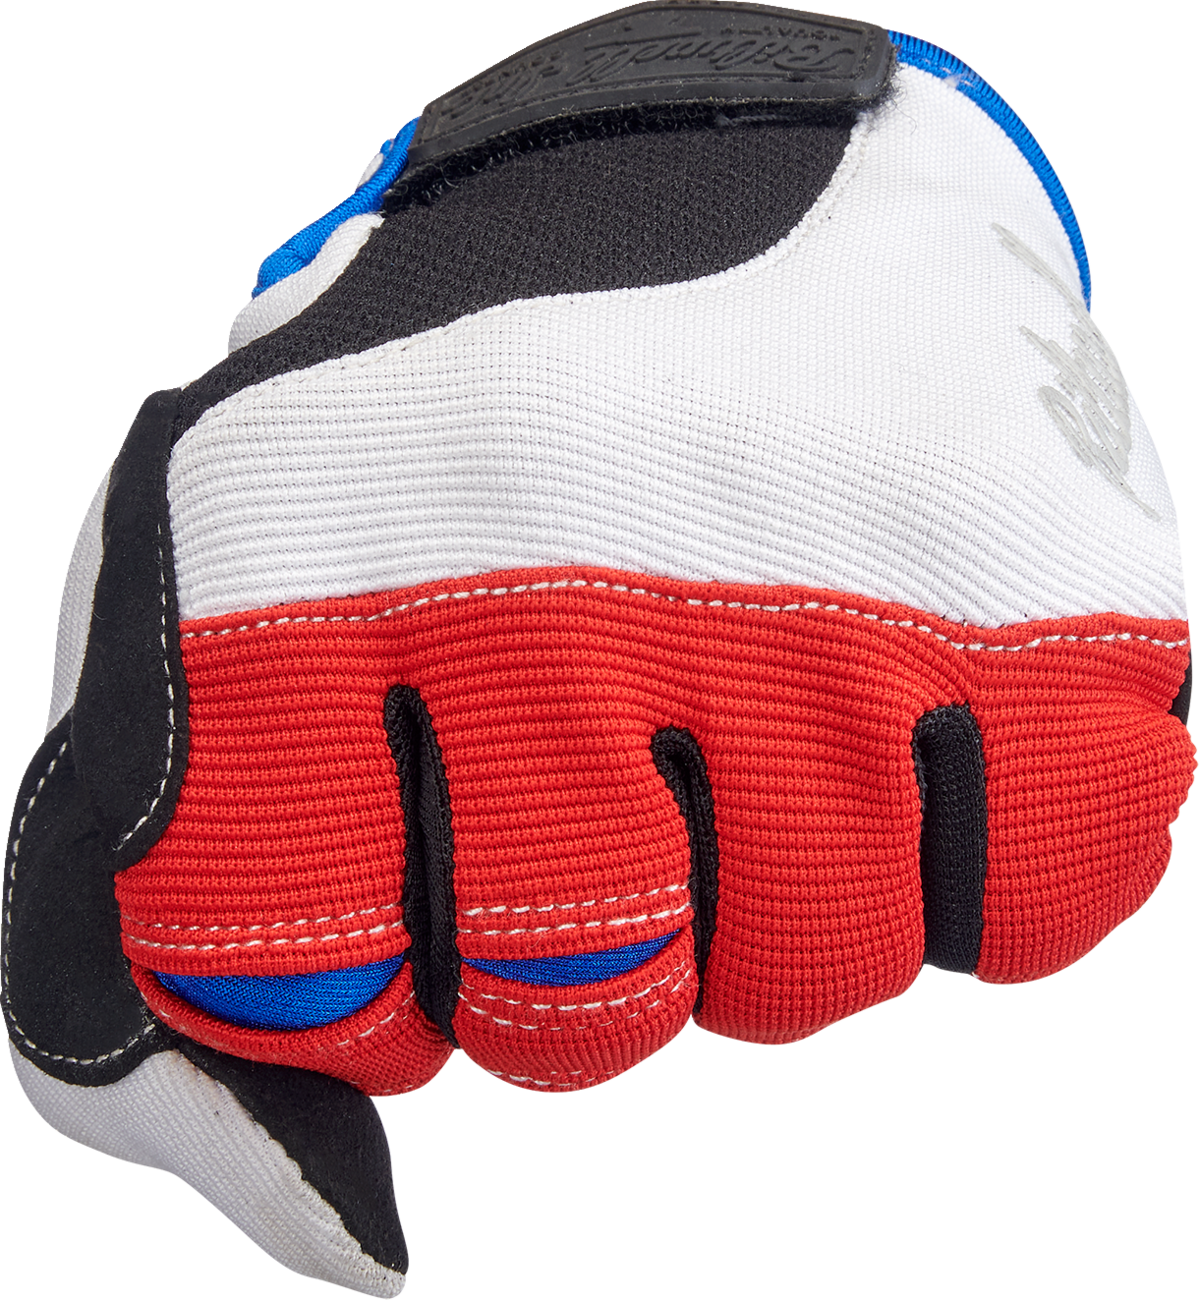 BILTWELL Moto Gloves - Red/White/Blue - Small 1501-1208-002